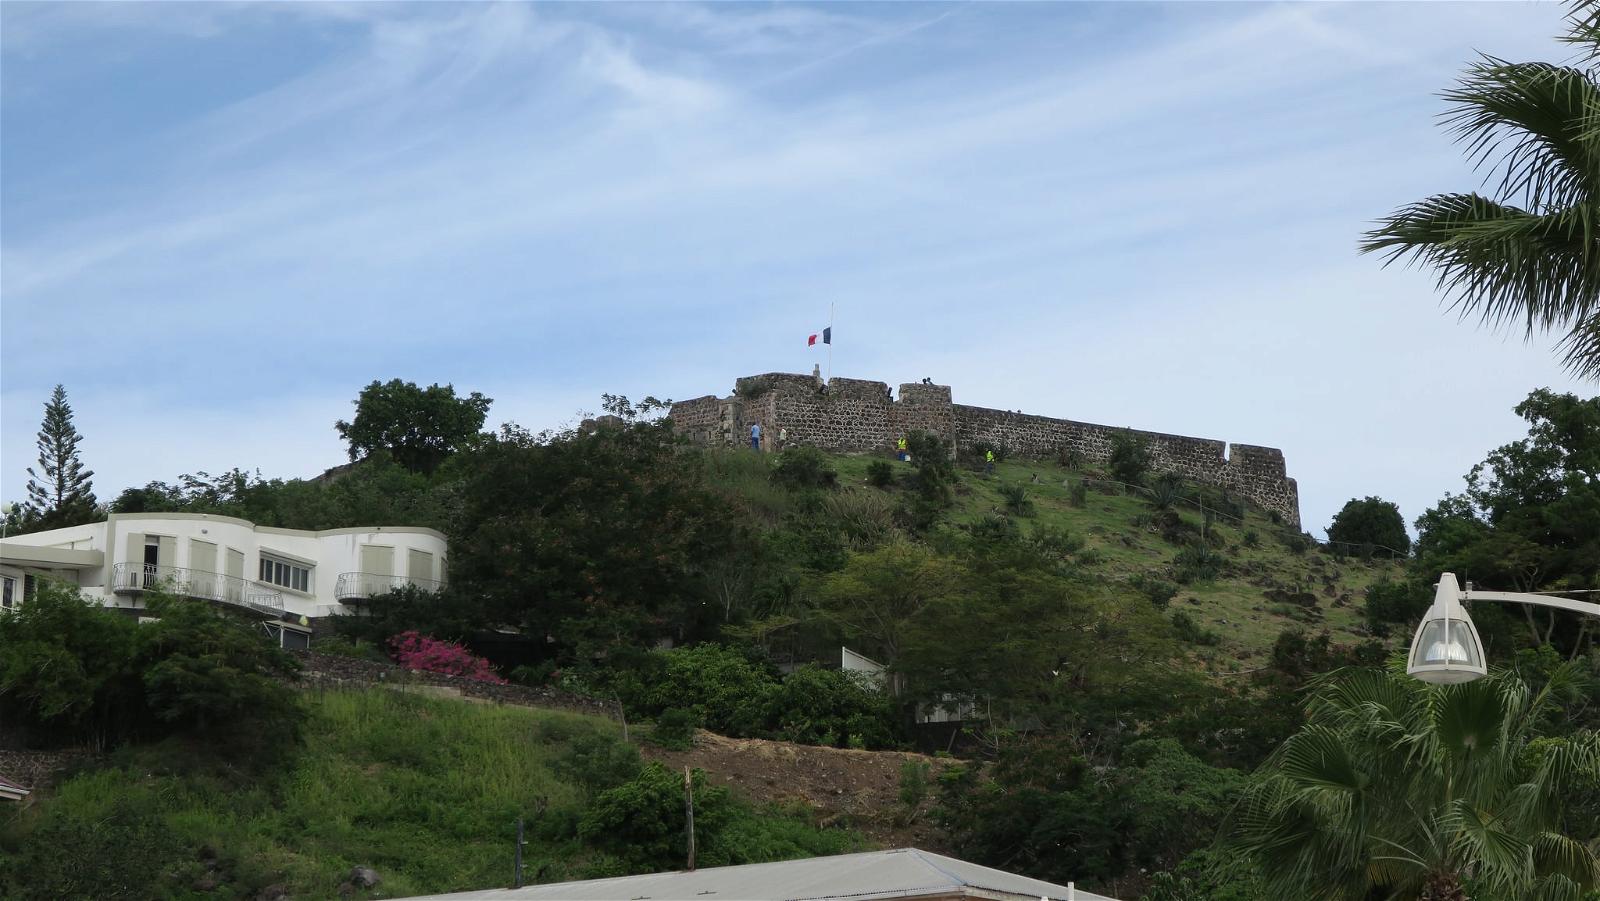 Hình ảnh của Fort Louis. saintmartin fortlouis